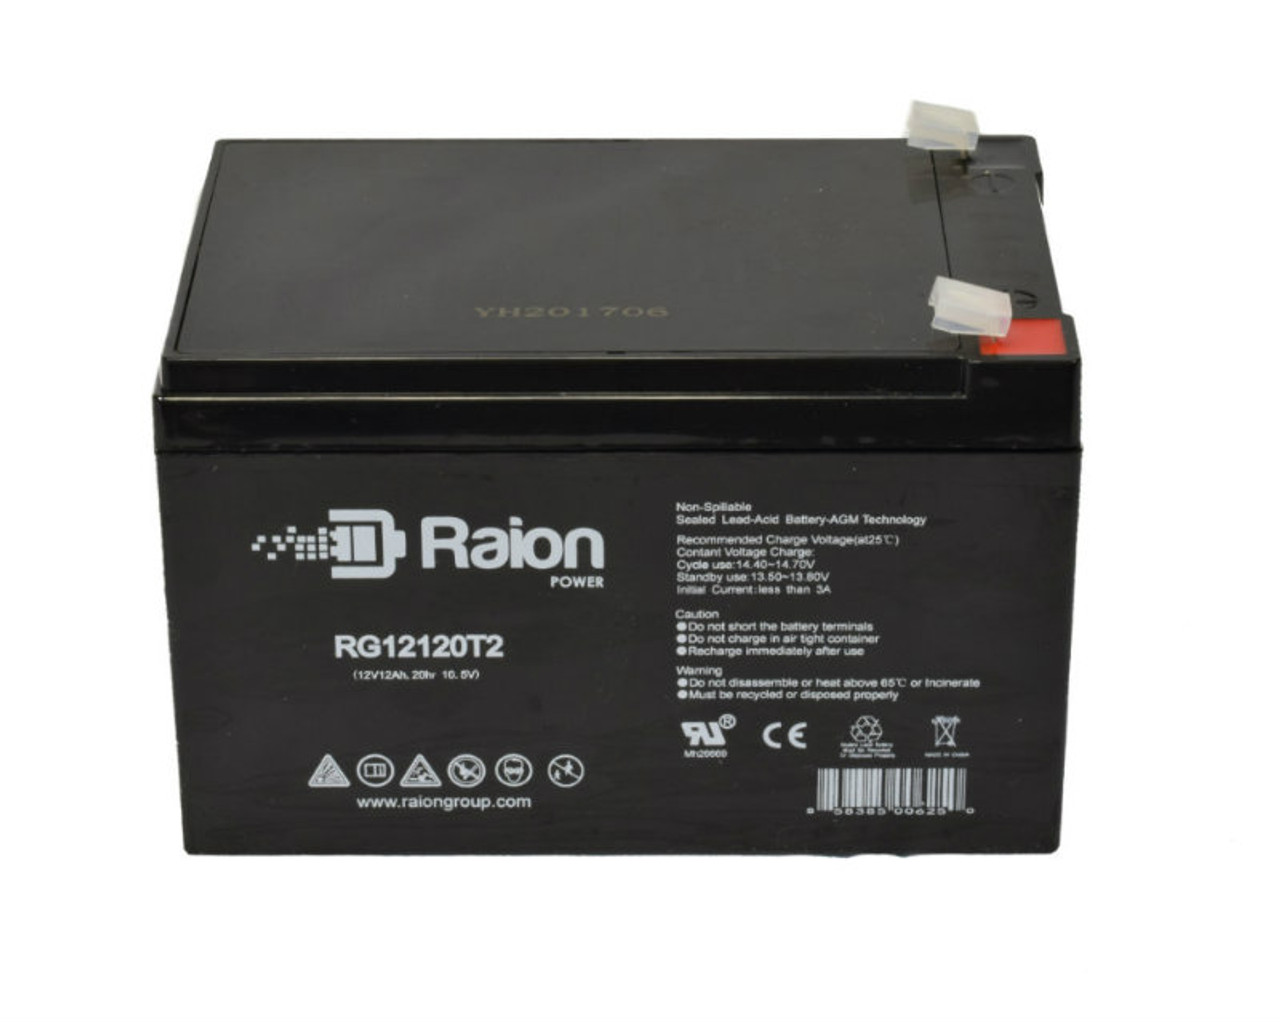 Raion Power RG12120T2 SLA Battery for Exell EB12120F2